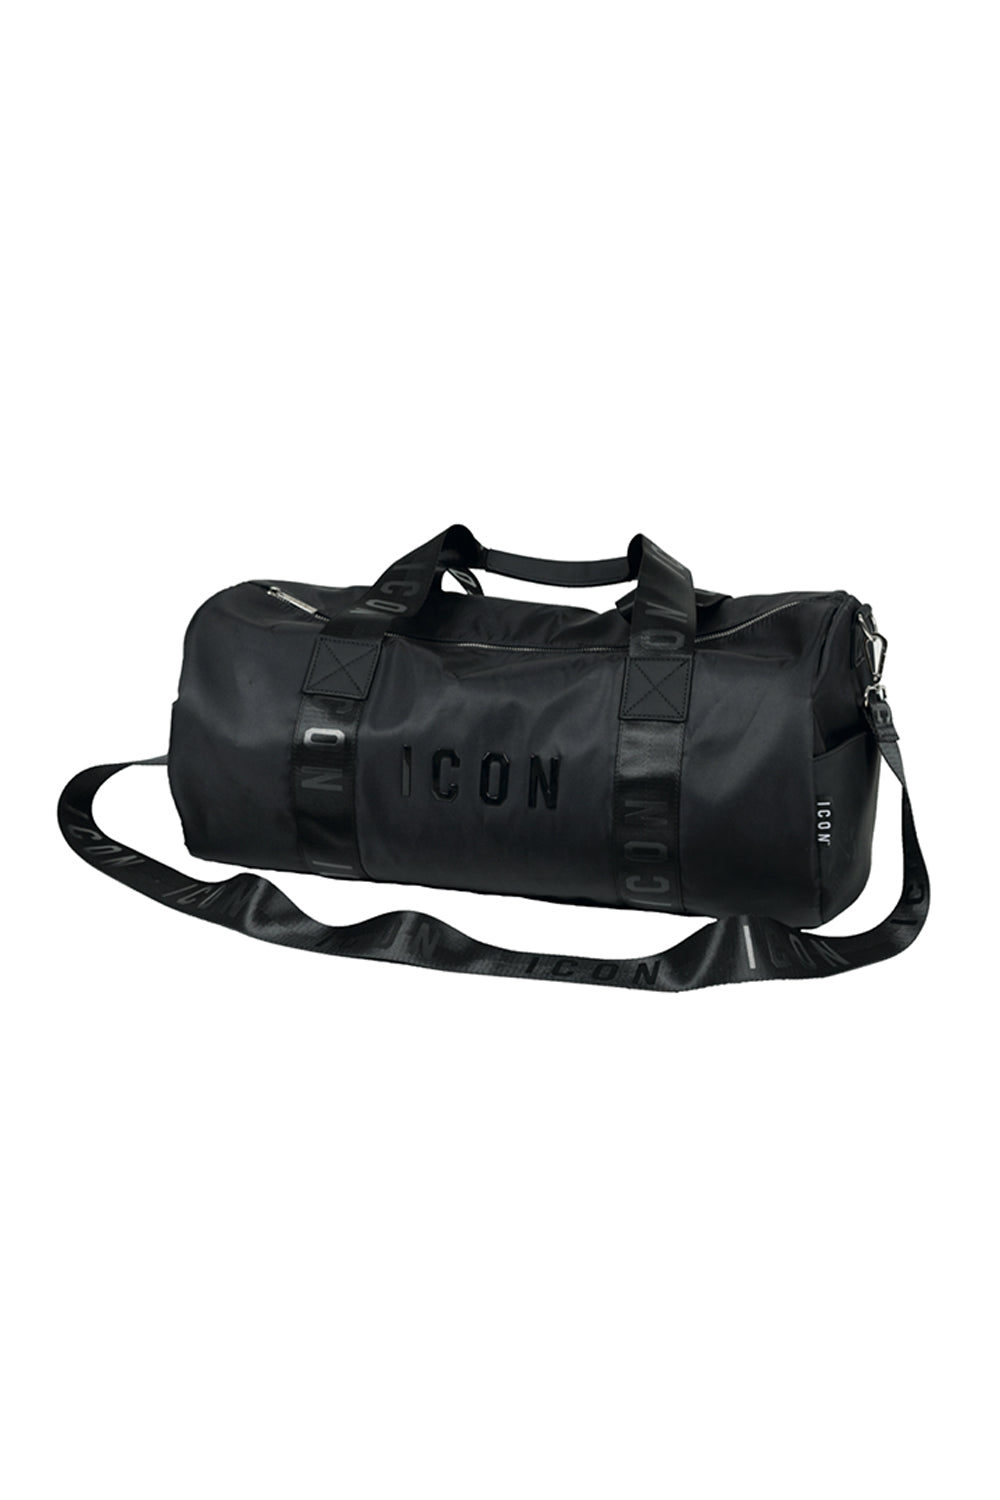 ICON Travel Bag